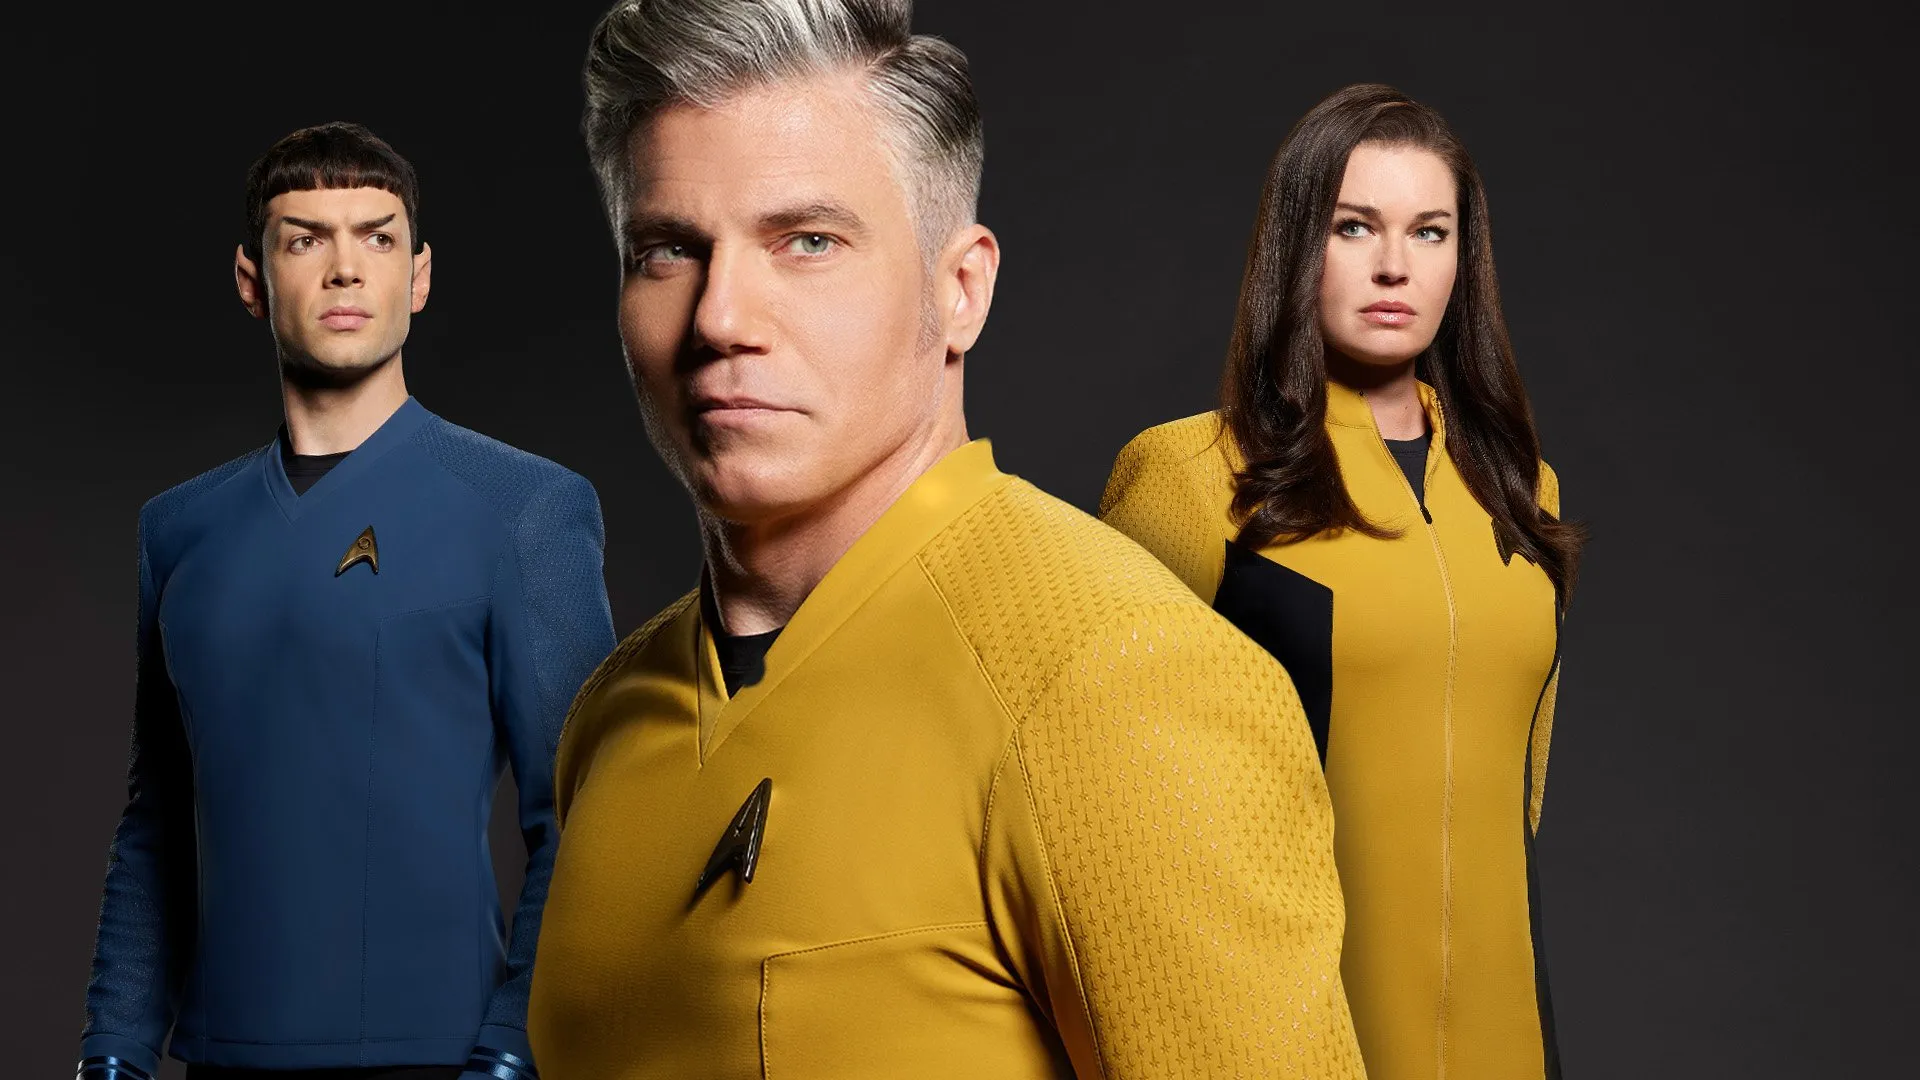 Star Trek Strange New Worlds Season 2 Episode 3 Release Date